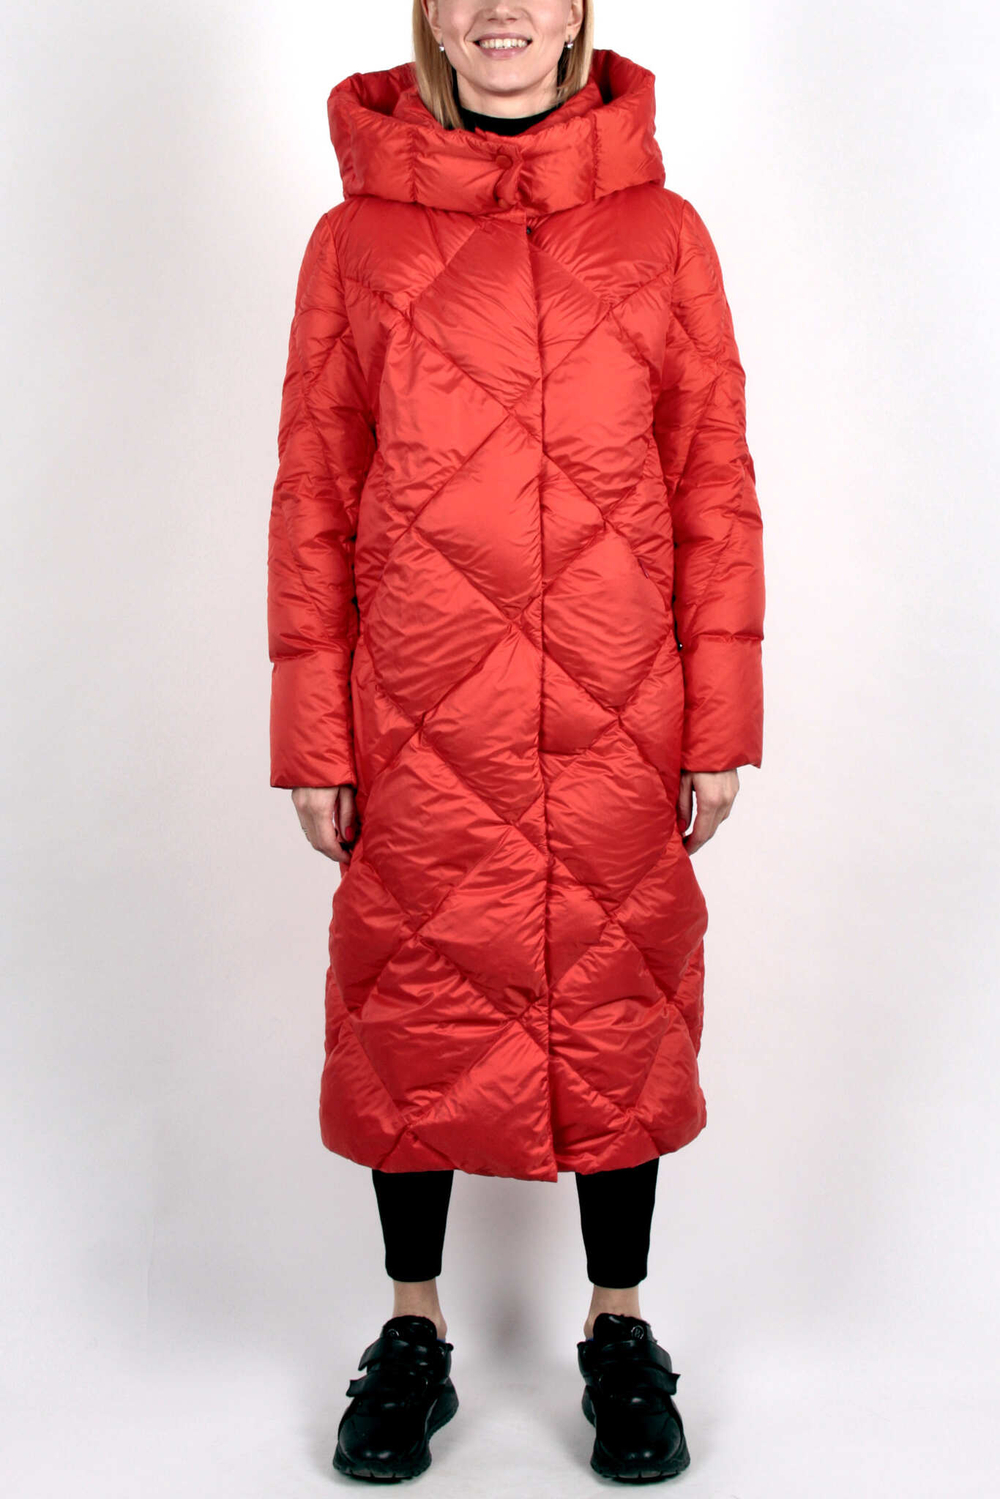 Пальто жен BLANCHETT GOOSE 410/700 оранжевое, капюшон